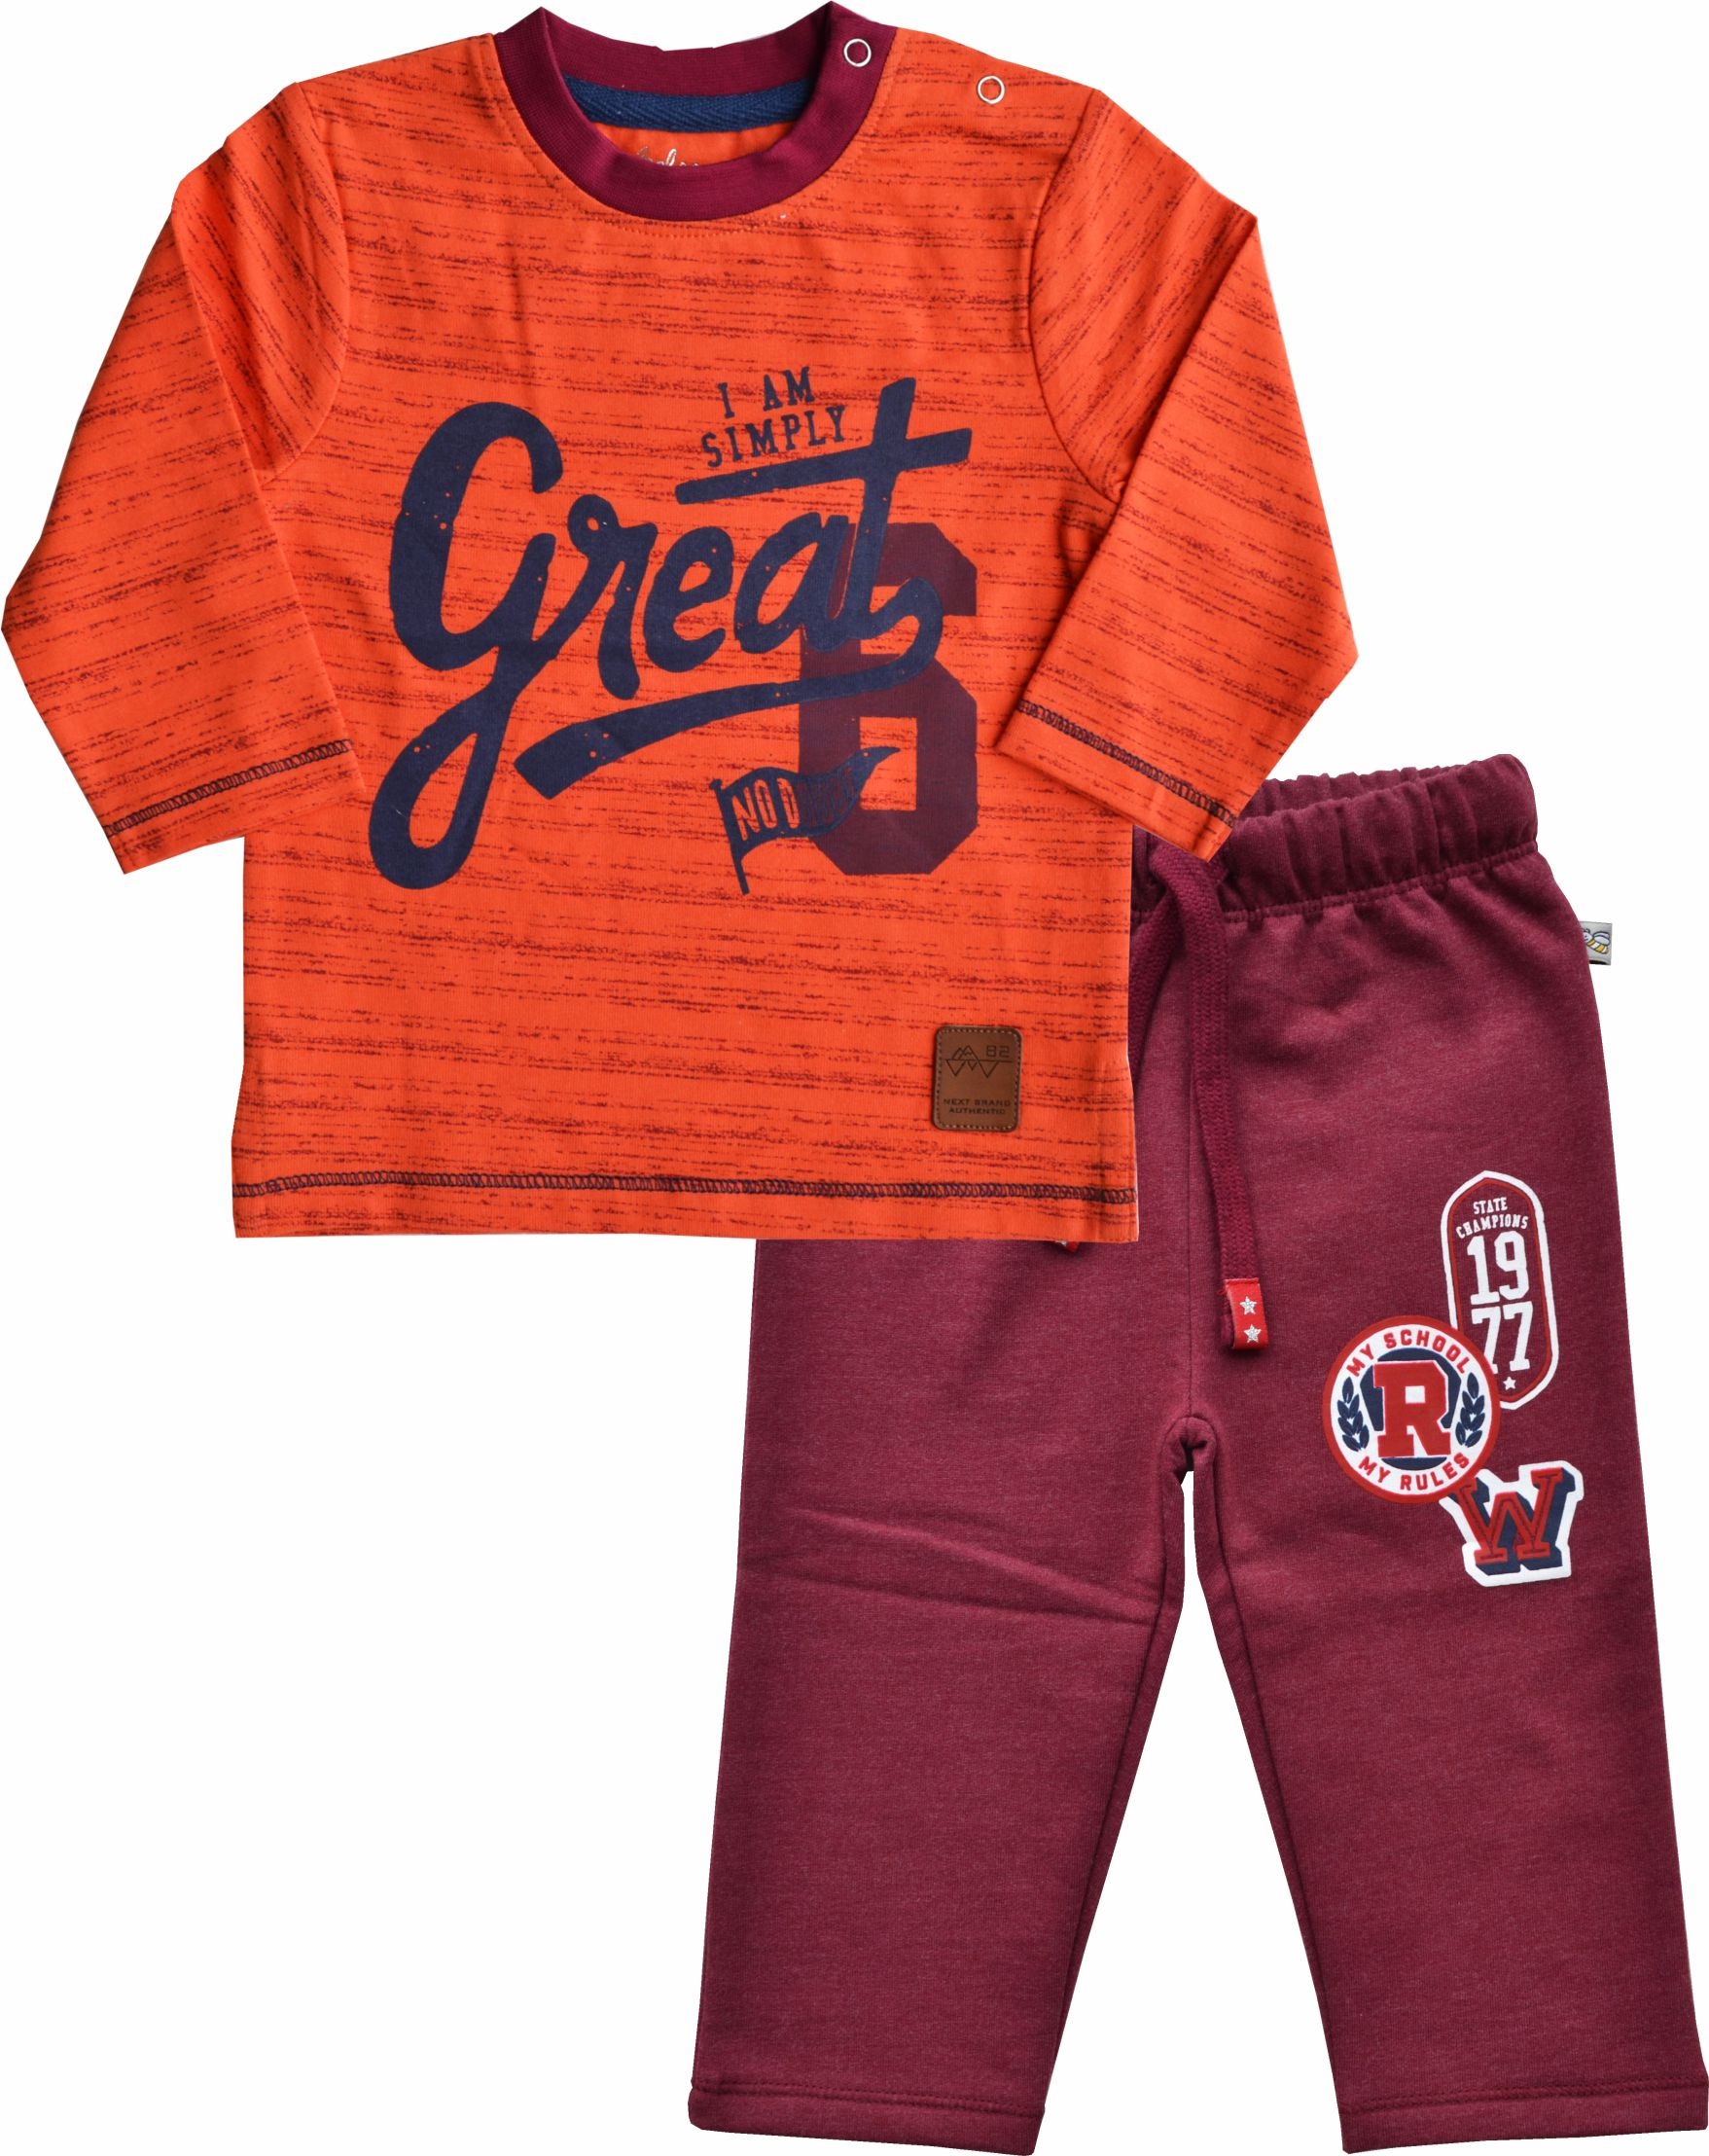 Orange Full Sleeve Printed T-Shirt + Maroon Pant Set (100% Cotton Interock)